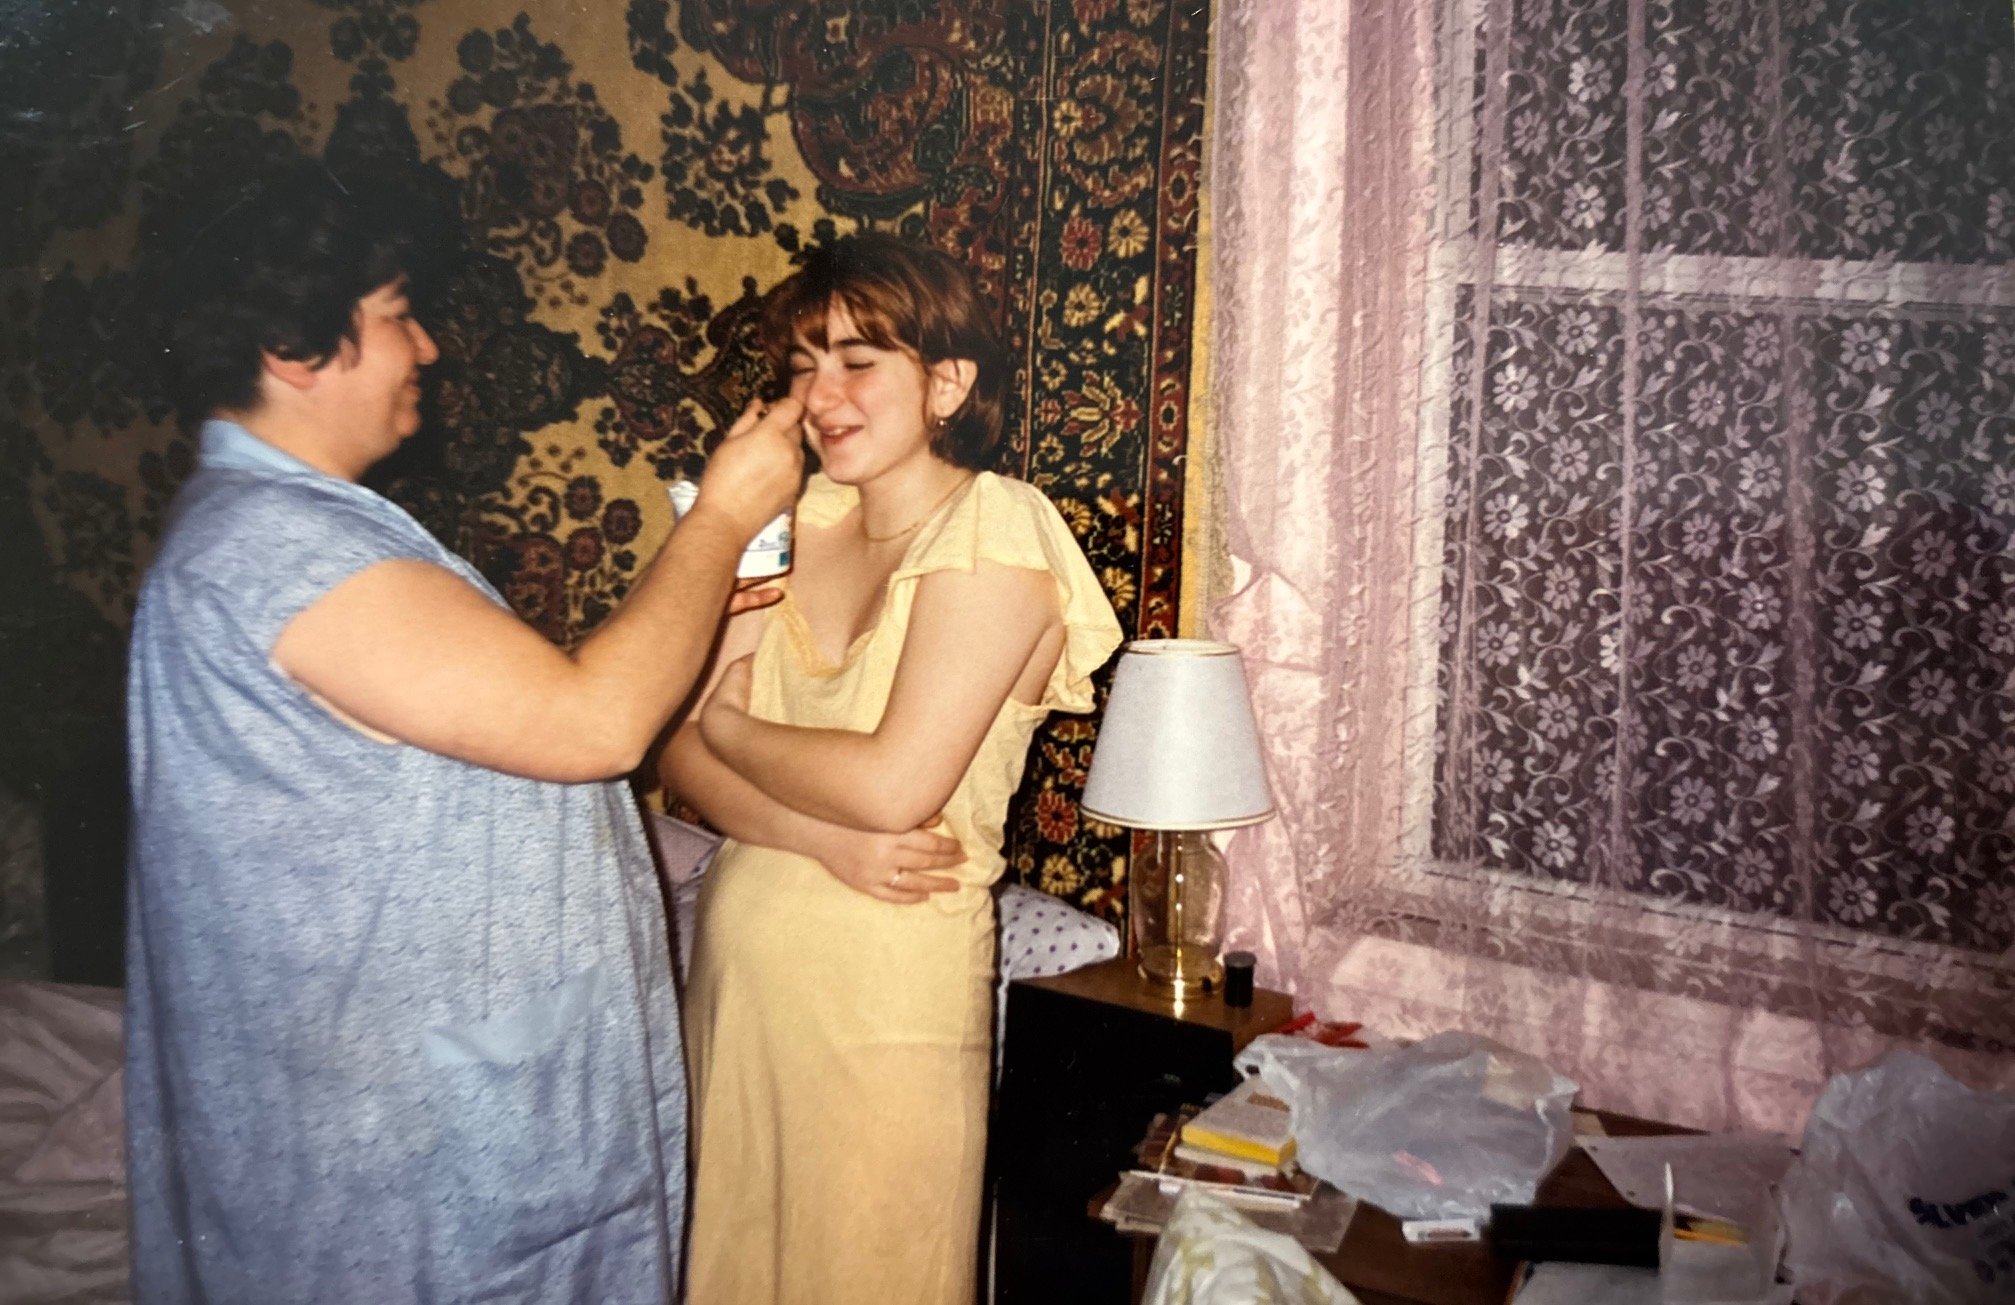    Mom feeding me American sour cream at bedtime. 1994   